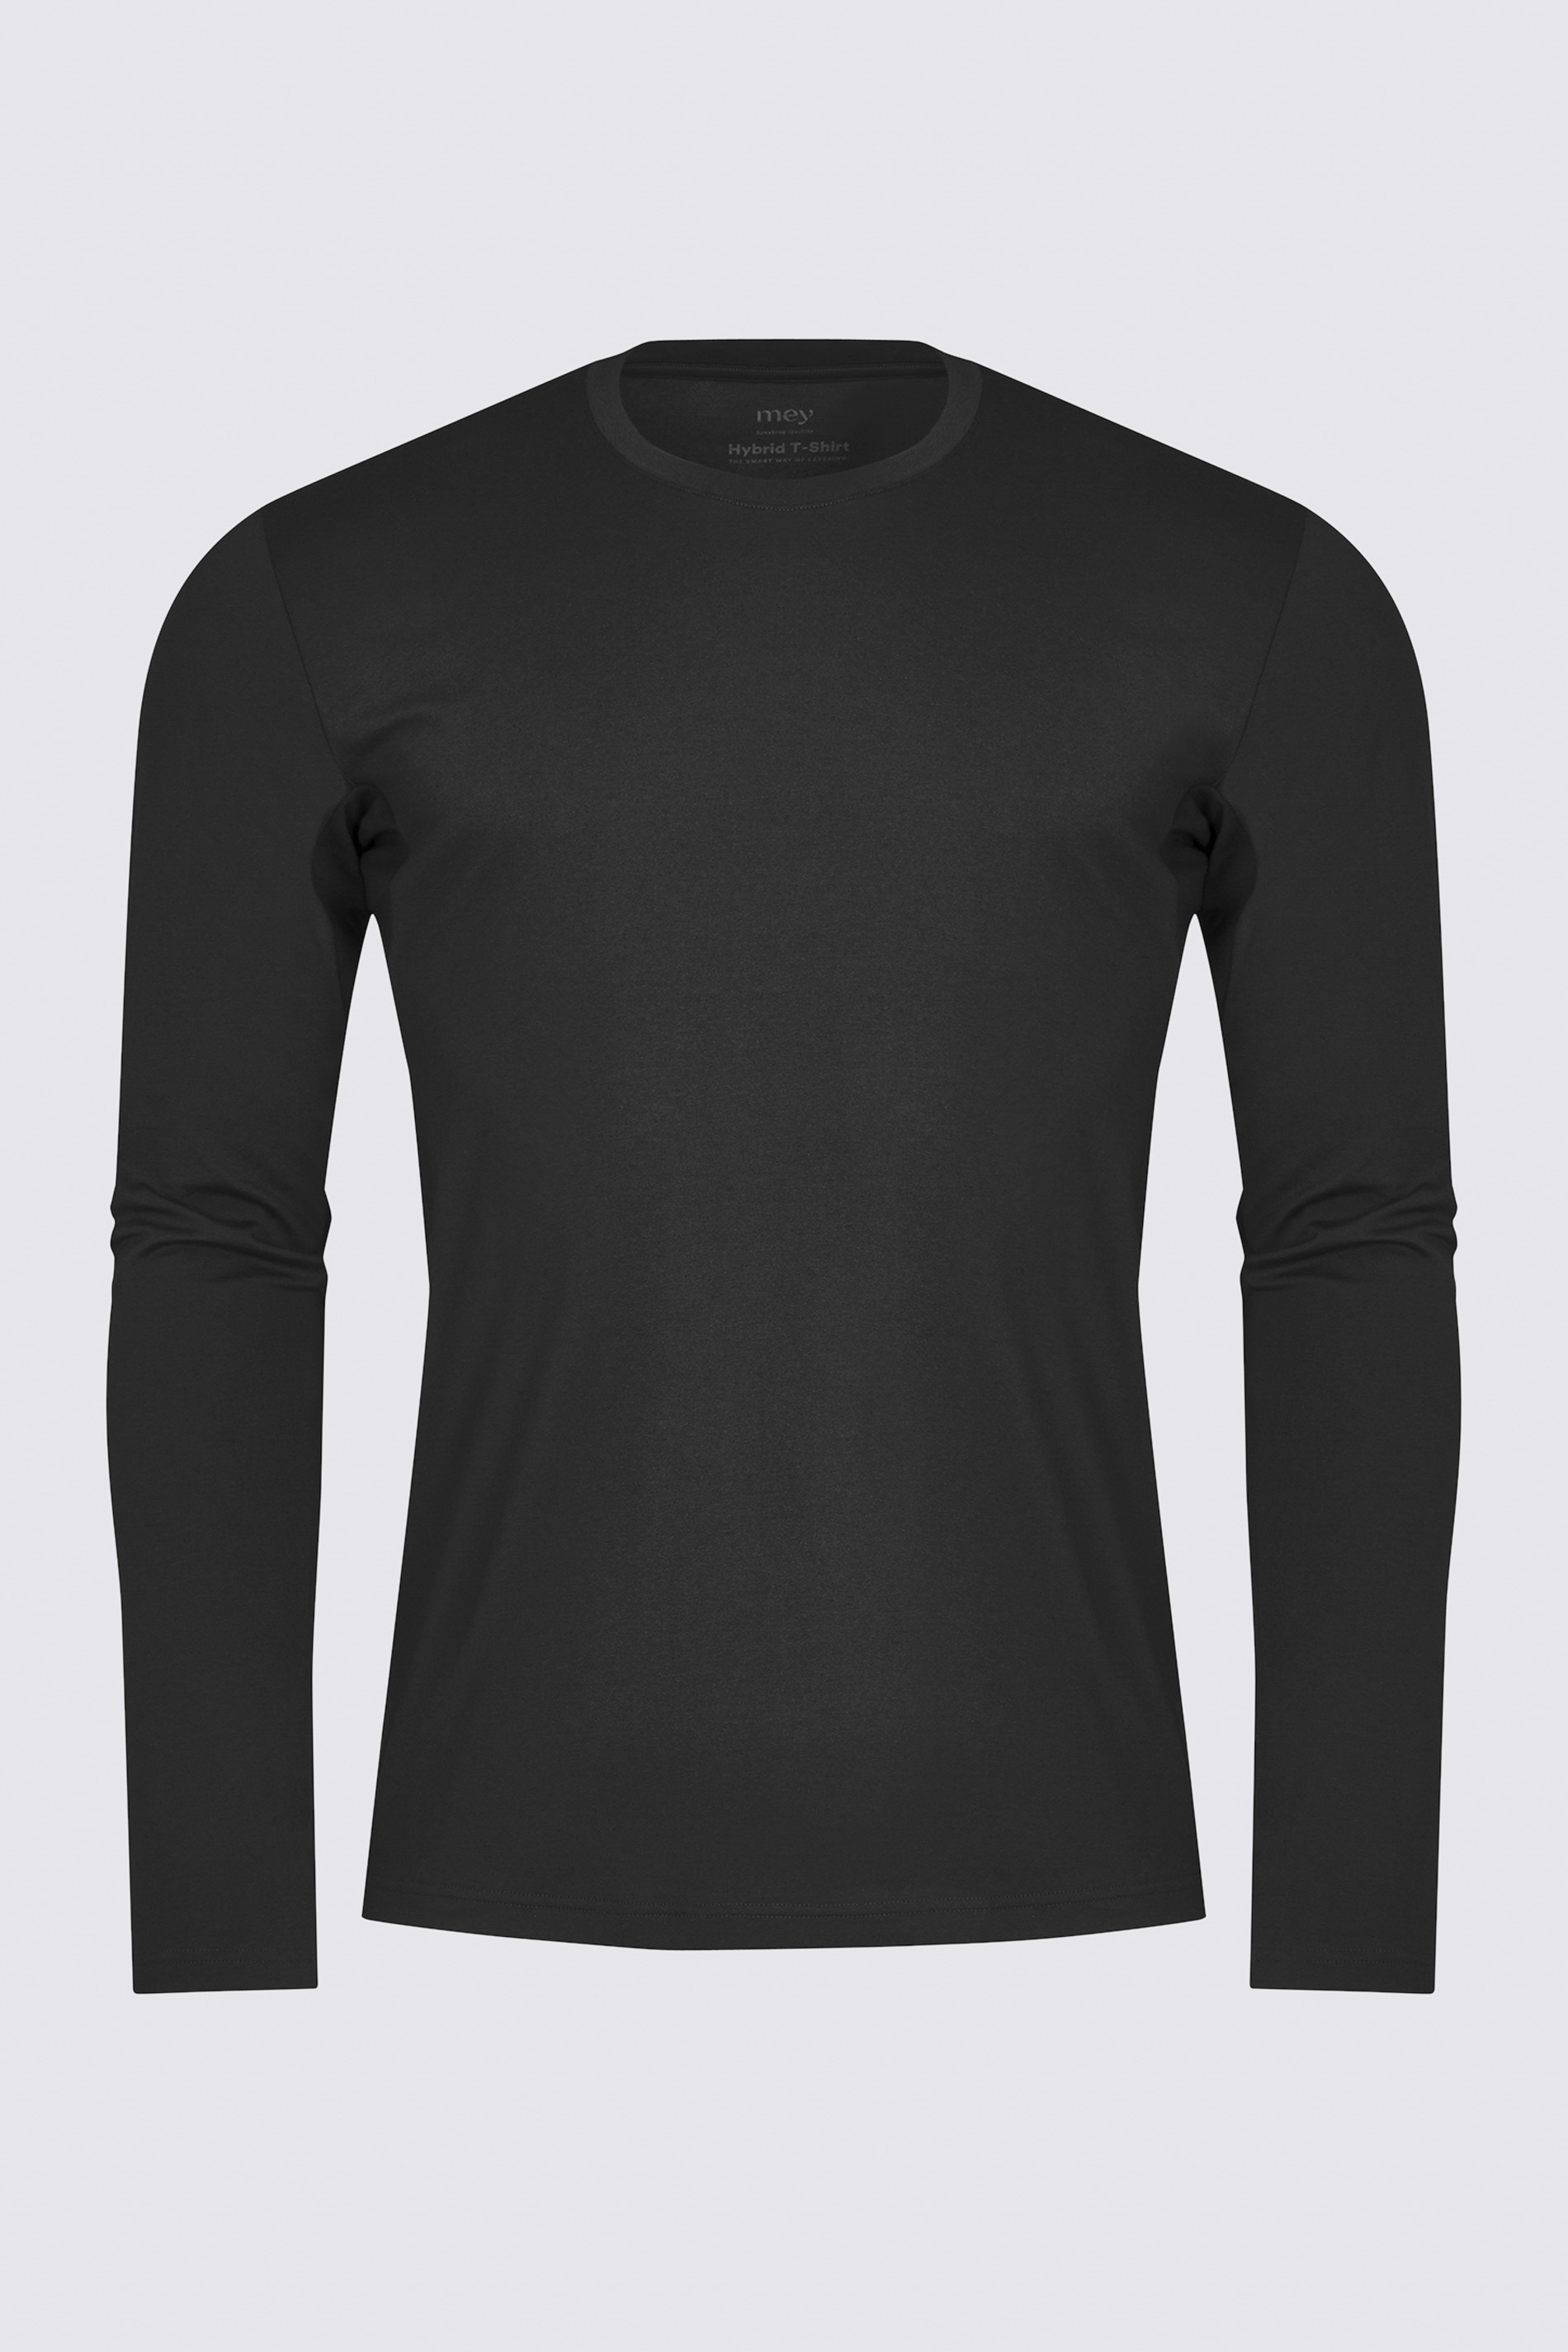 Hybrid-T-Shirt | Long-sleeve Black Serie Hybrid T-Shirt Cut Out | mey®